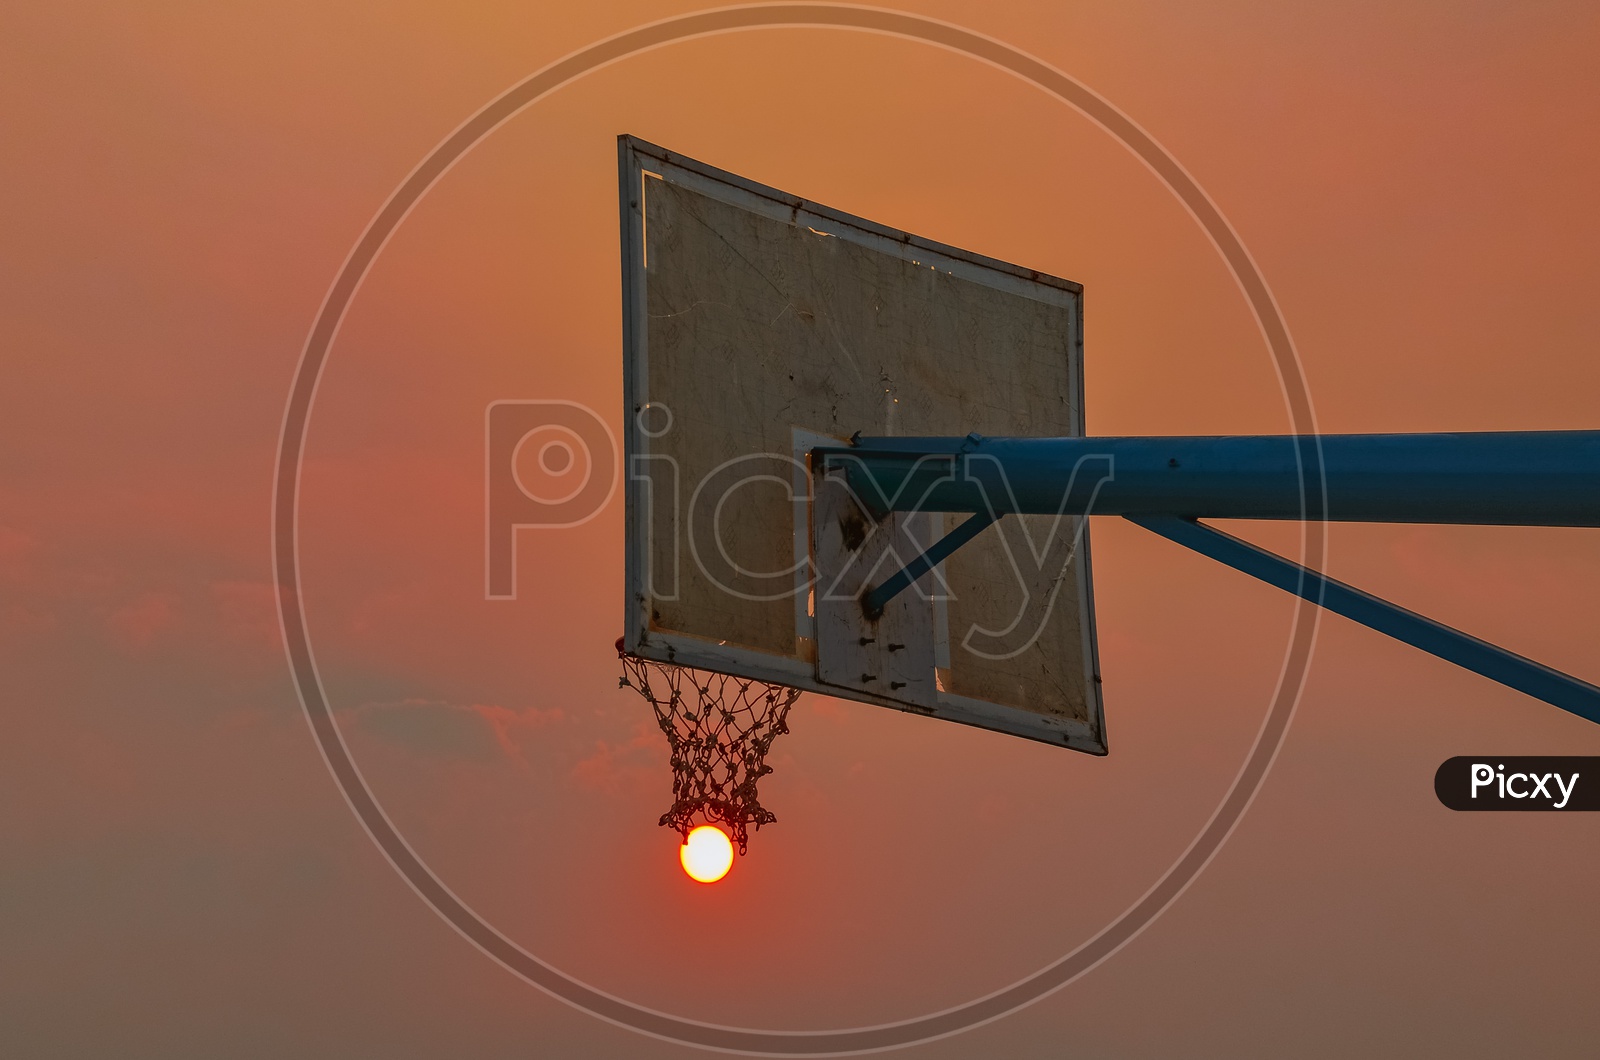 Sun and Basketball Pole